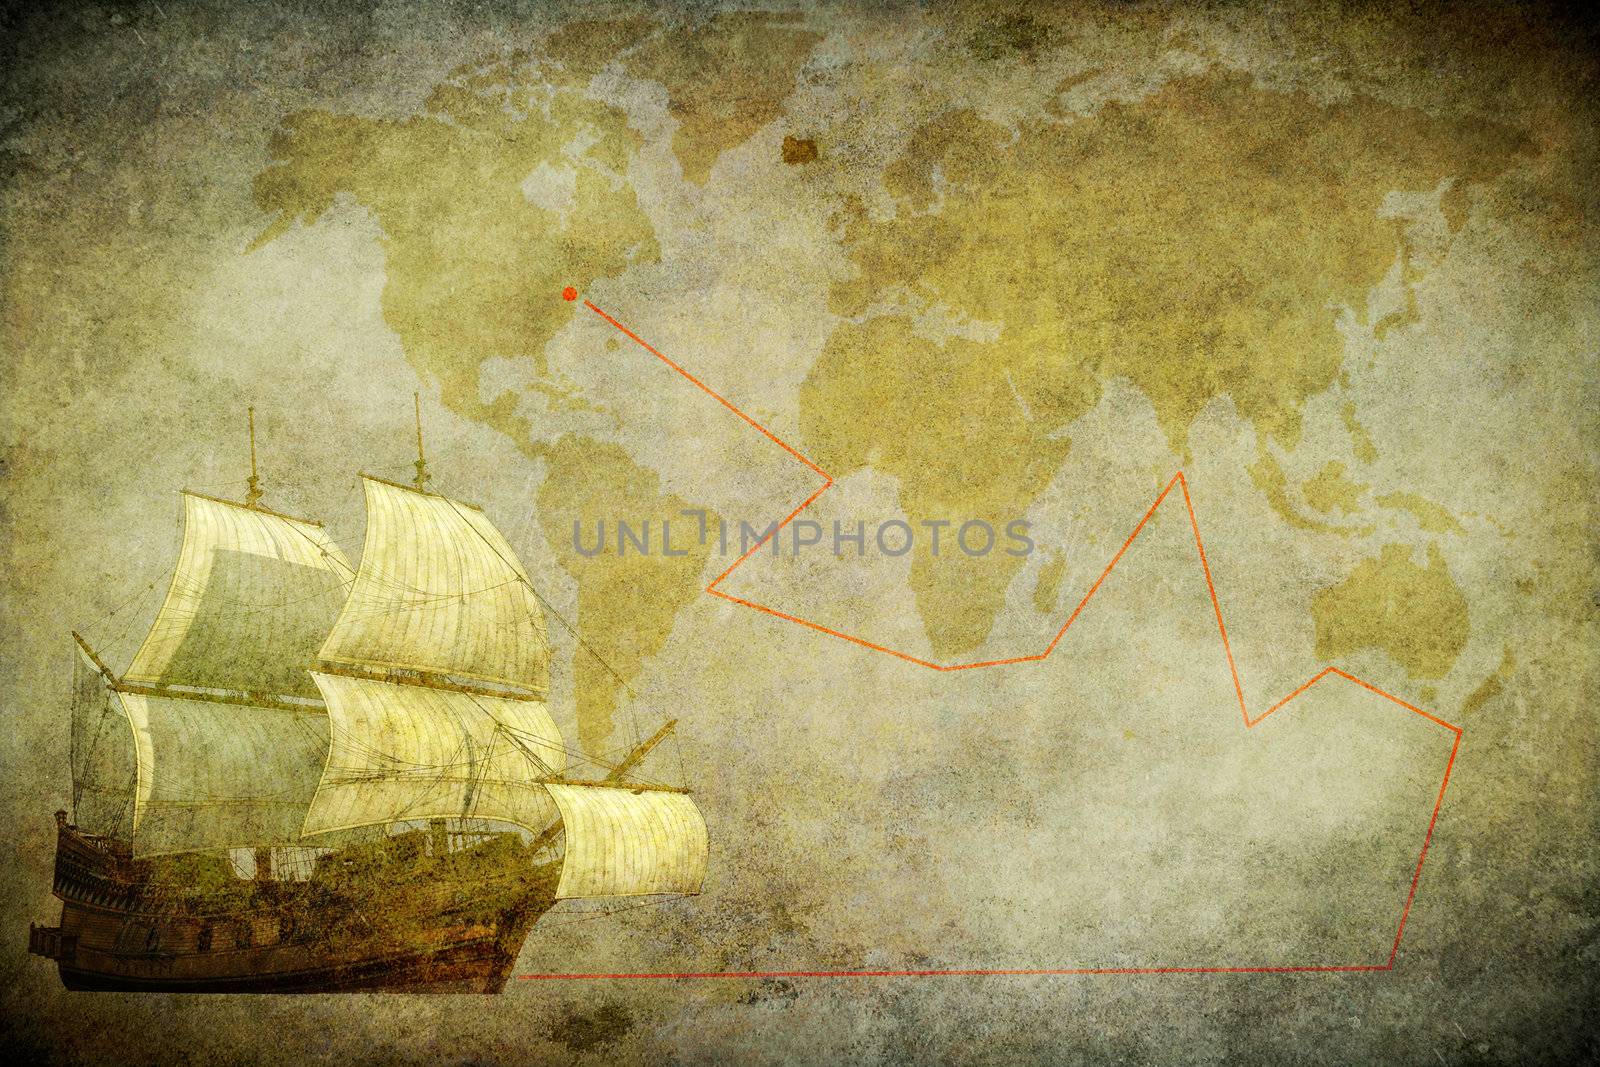 Sailing ship on a grunge background by petrkurgan